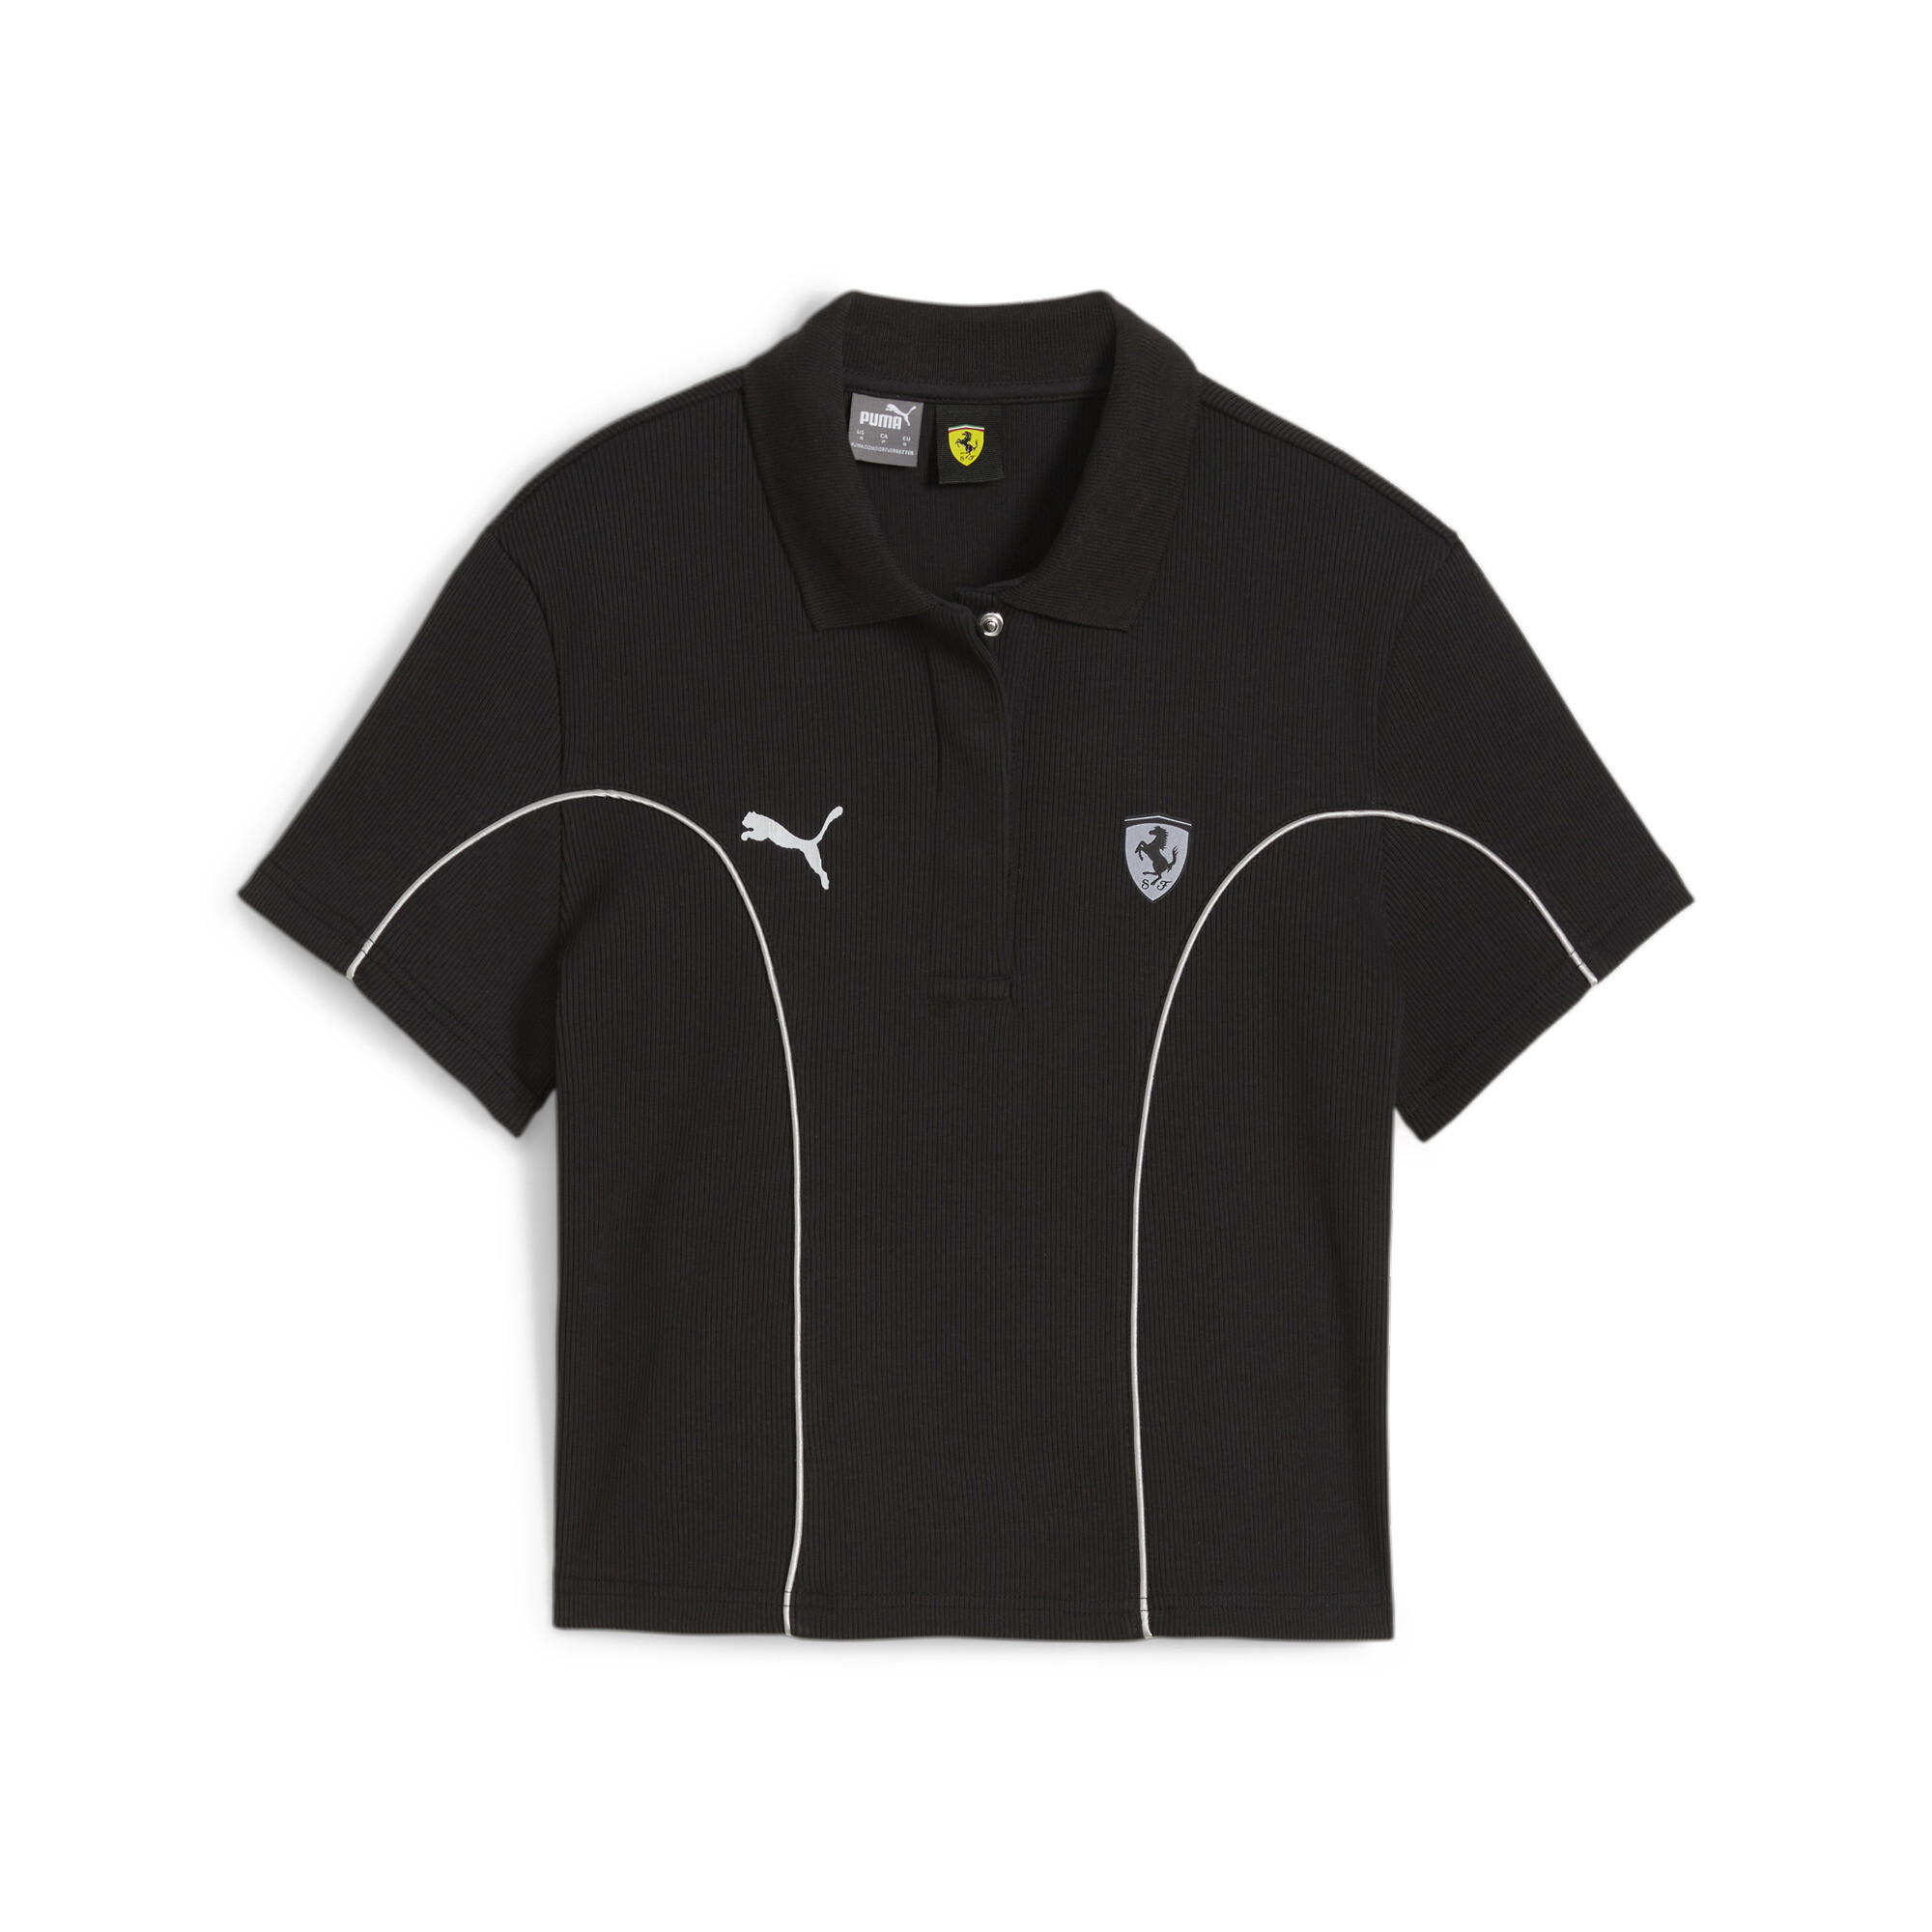 Women's Puma Scuderia Ferrari Style's Motorsport Polo T-Shirt, Black T-Shirt, Size XXS T-Shirt, Clothing